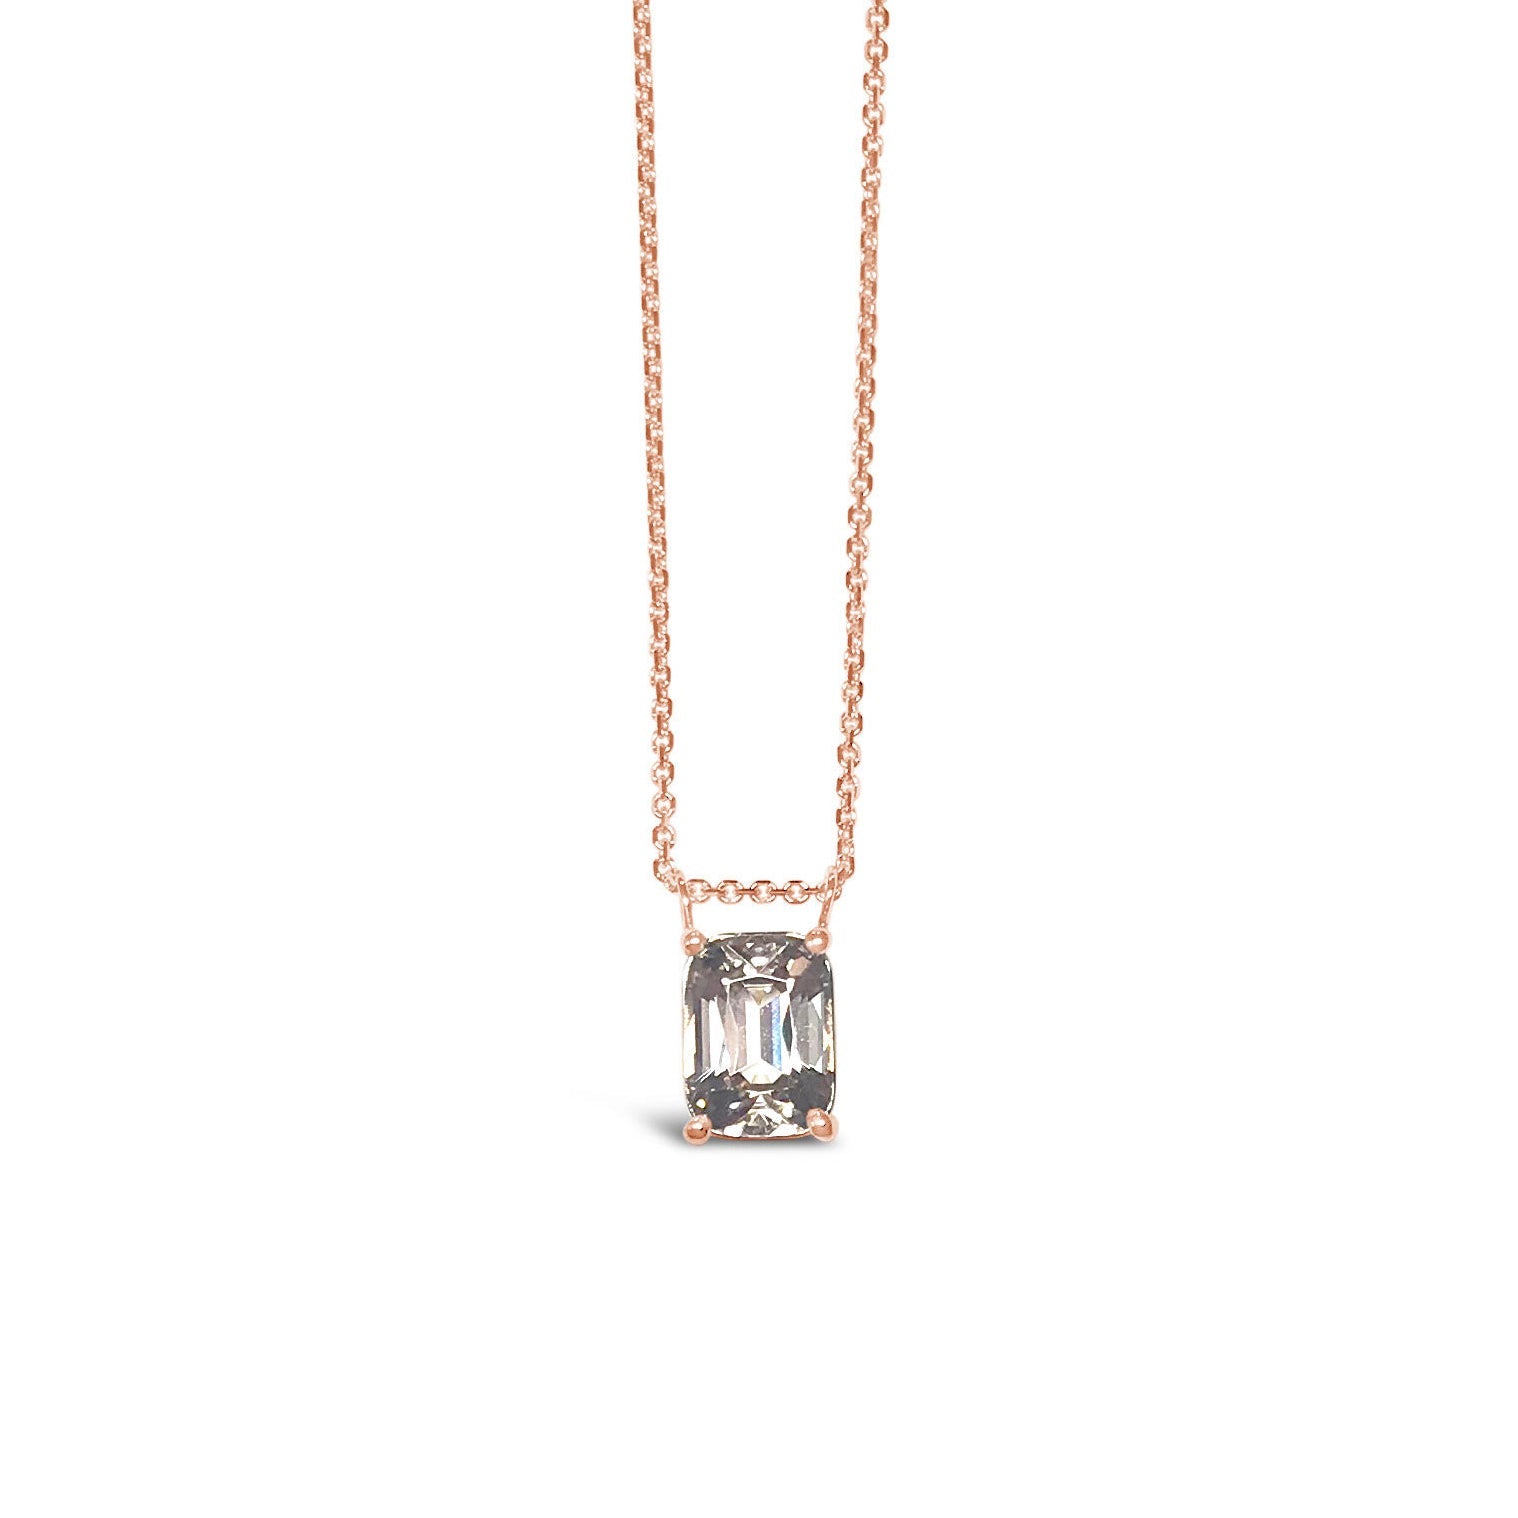 Peach tourmaline necklace - LOFT.bijoux || Custom jewelry & wedding rings / Bijoux sur mesure & bagues de mariage || Montreal